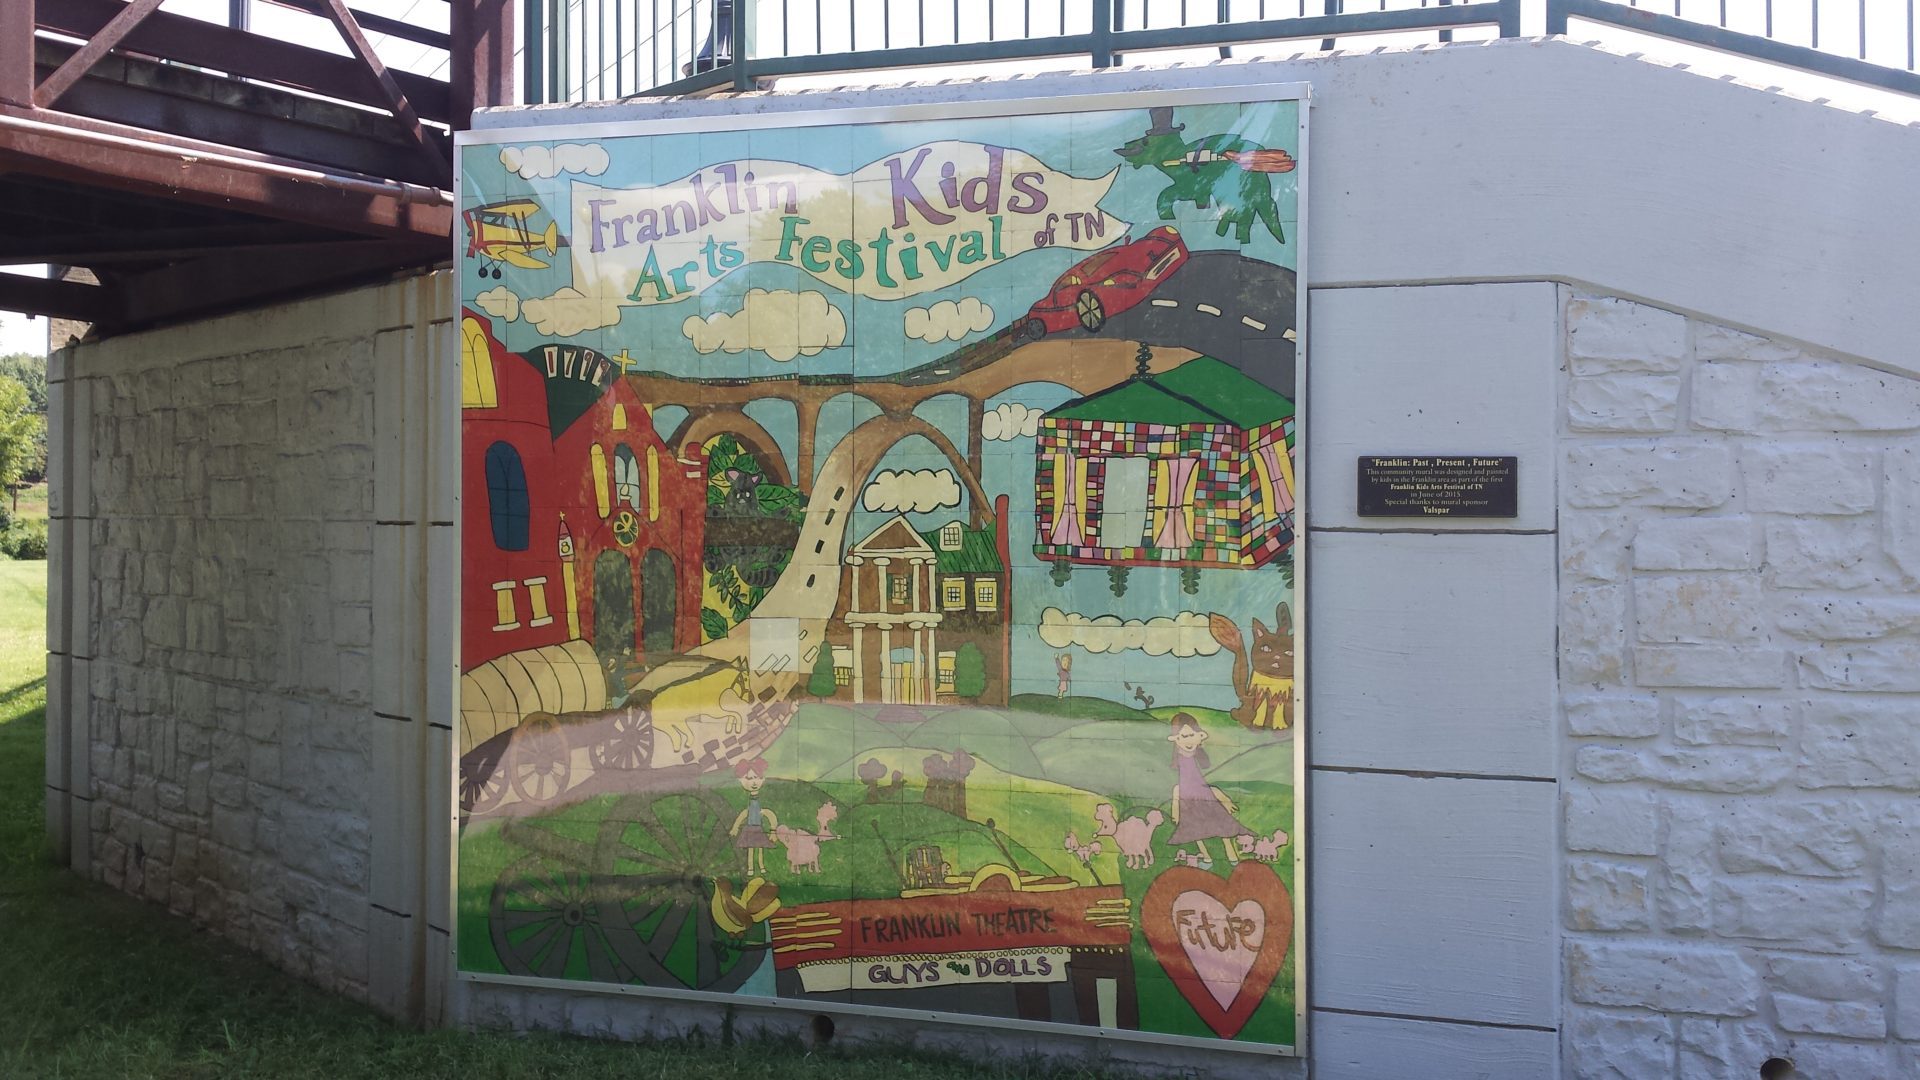 Franklin Kids Arts Festival Tennessee, Franklin, Tennessee art event - Mural